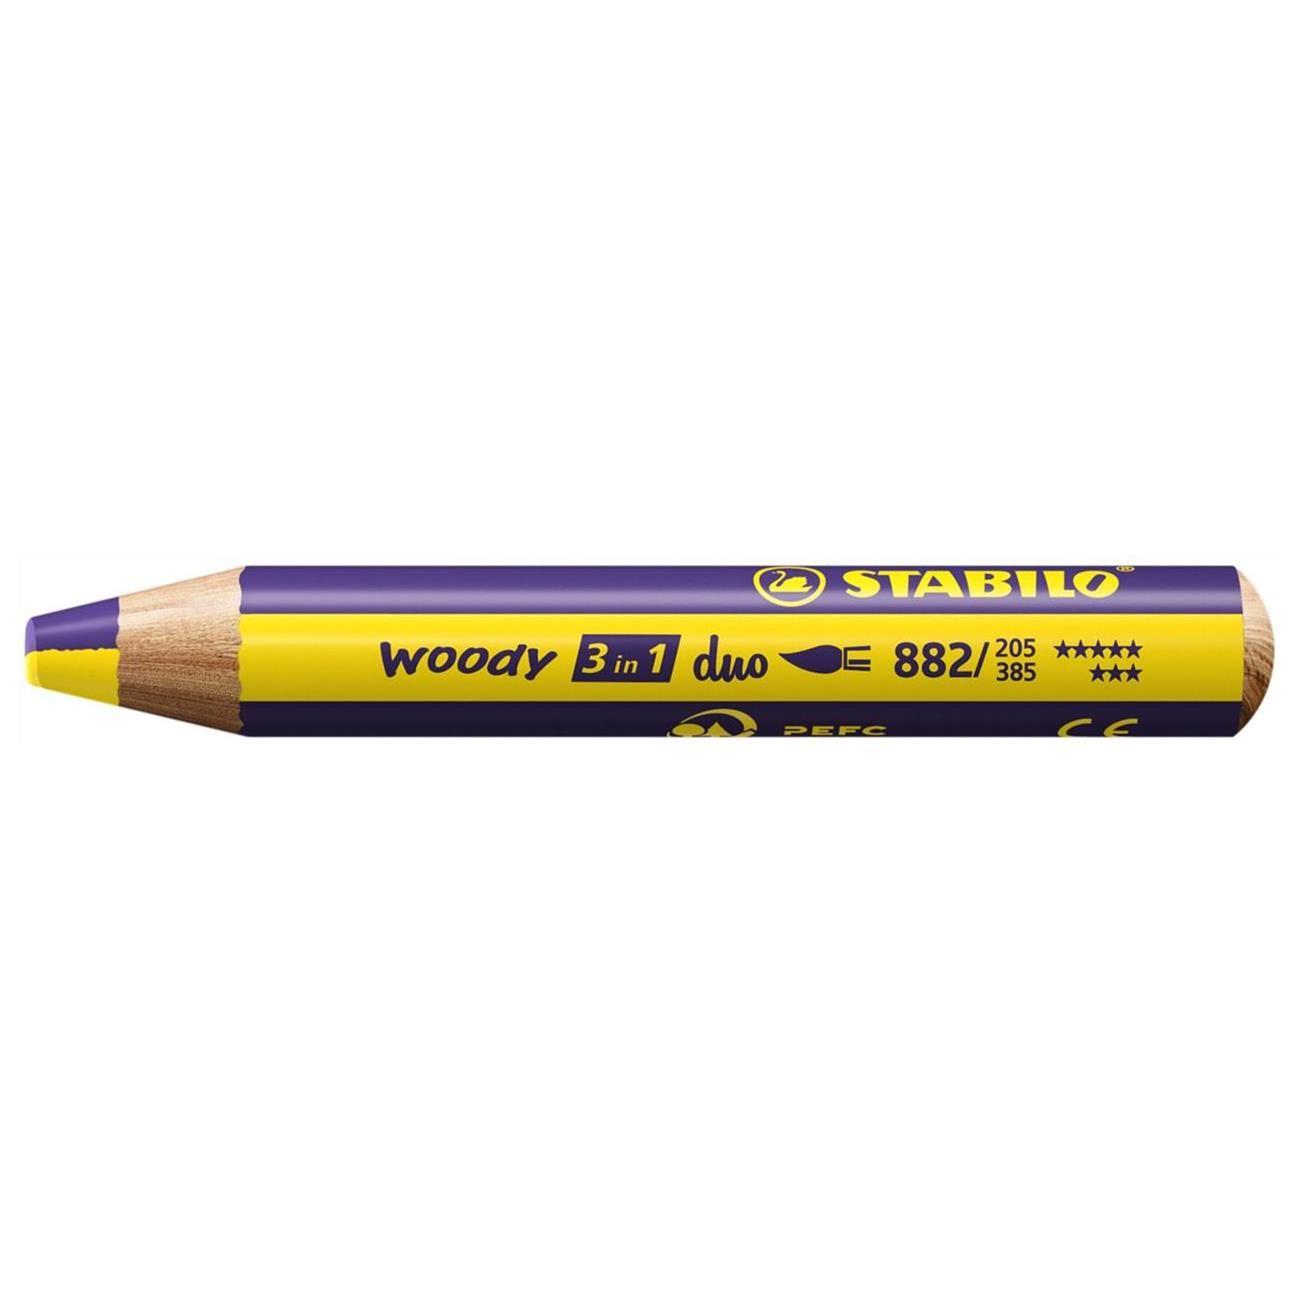 STABILO Crayon multi-talents woody 3 in 1 duo - jaune-violet